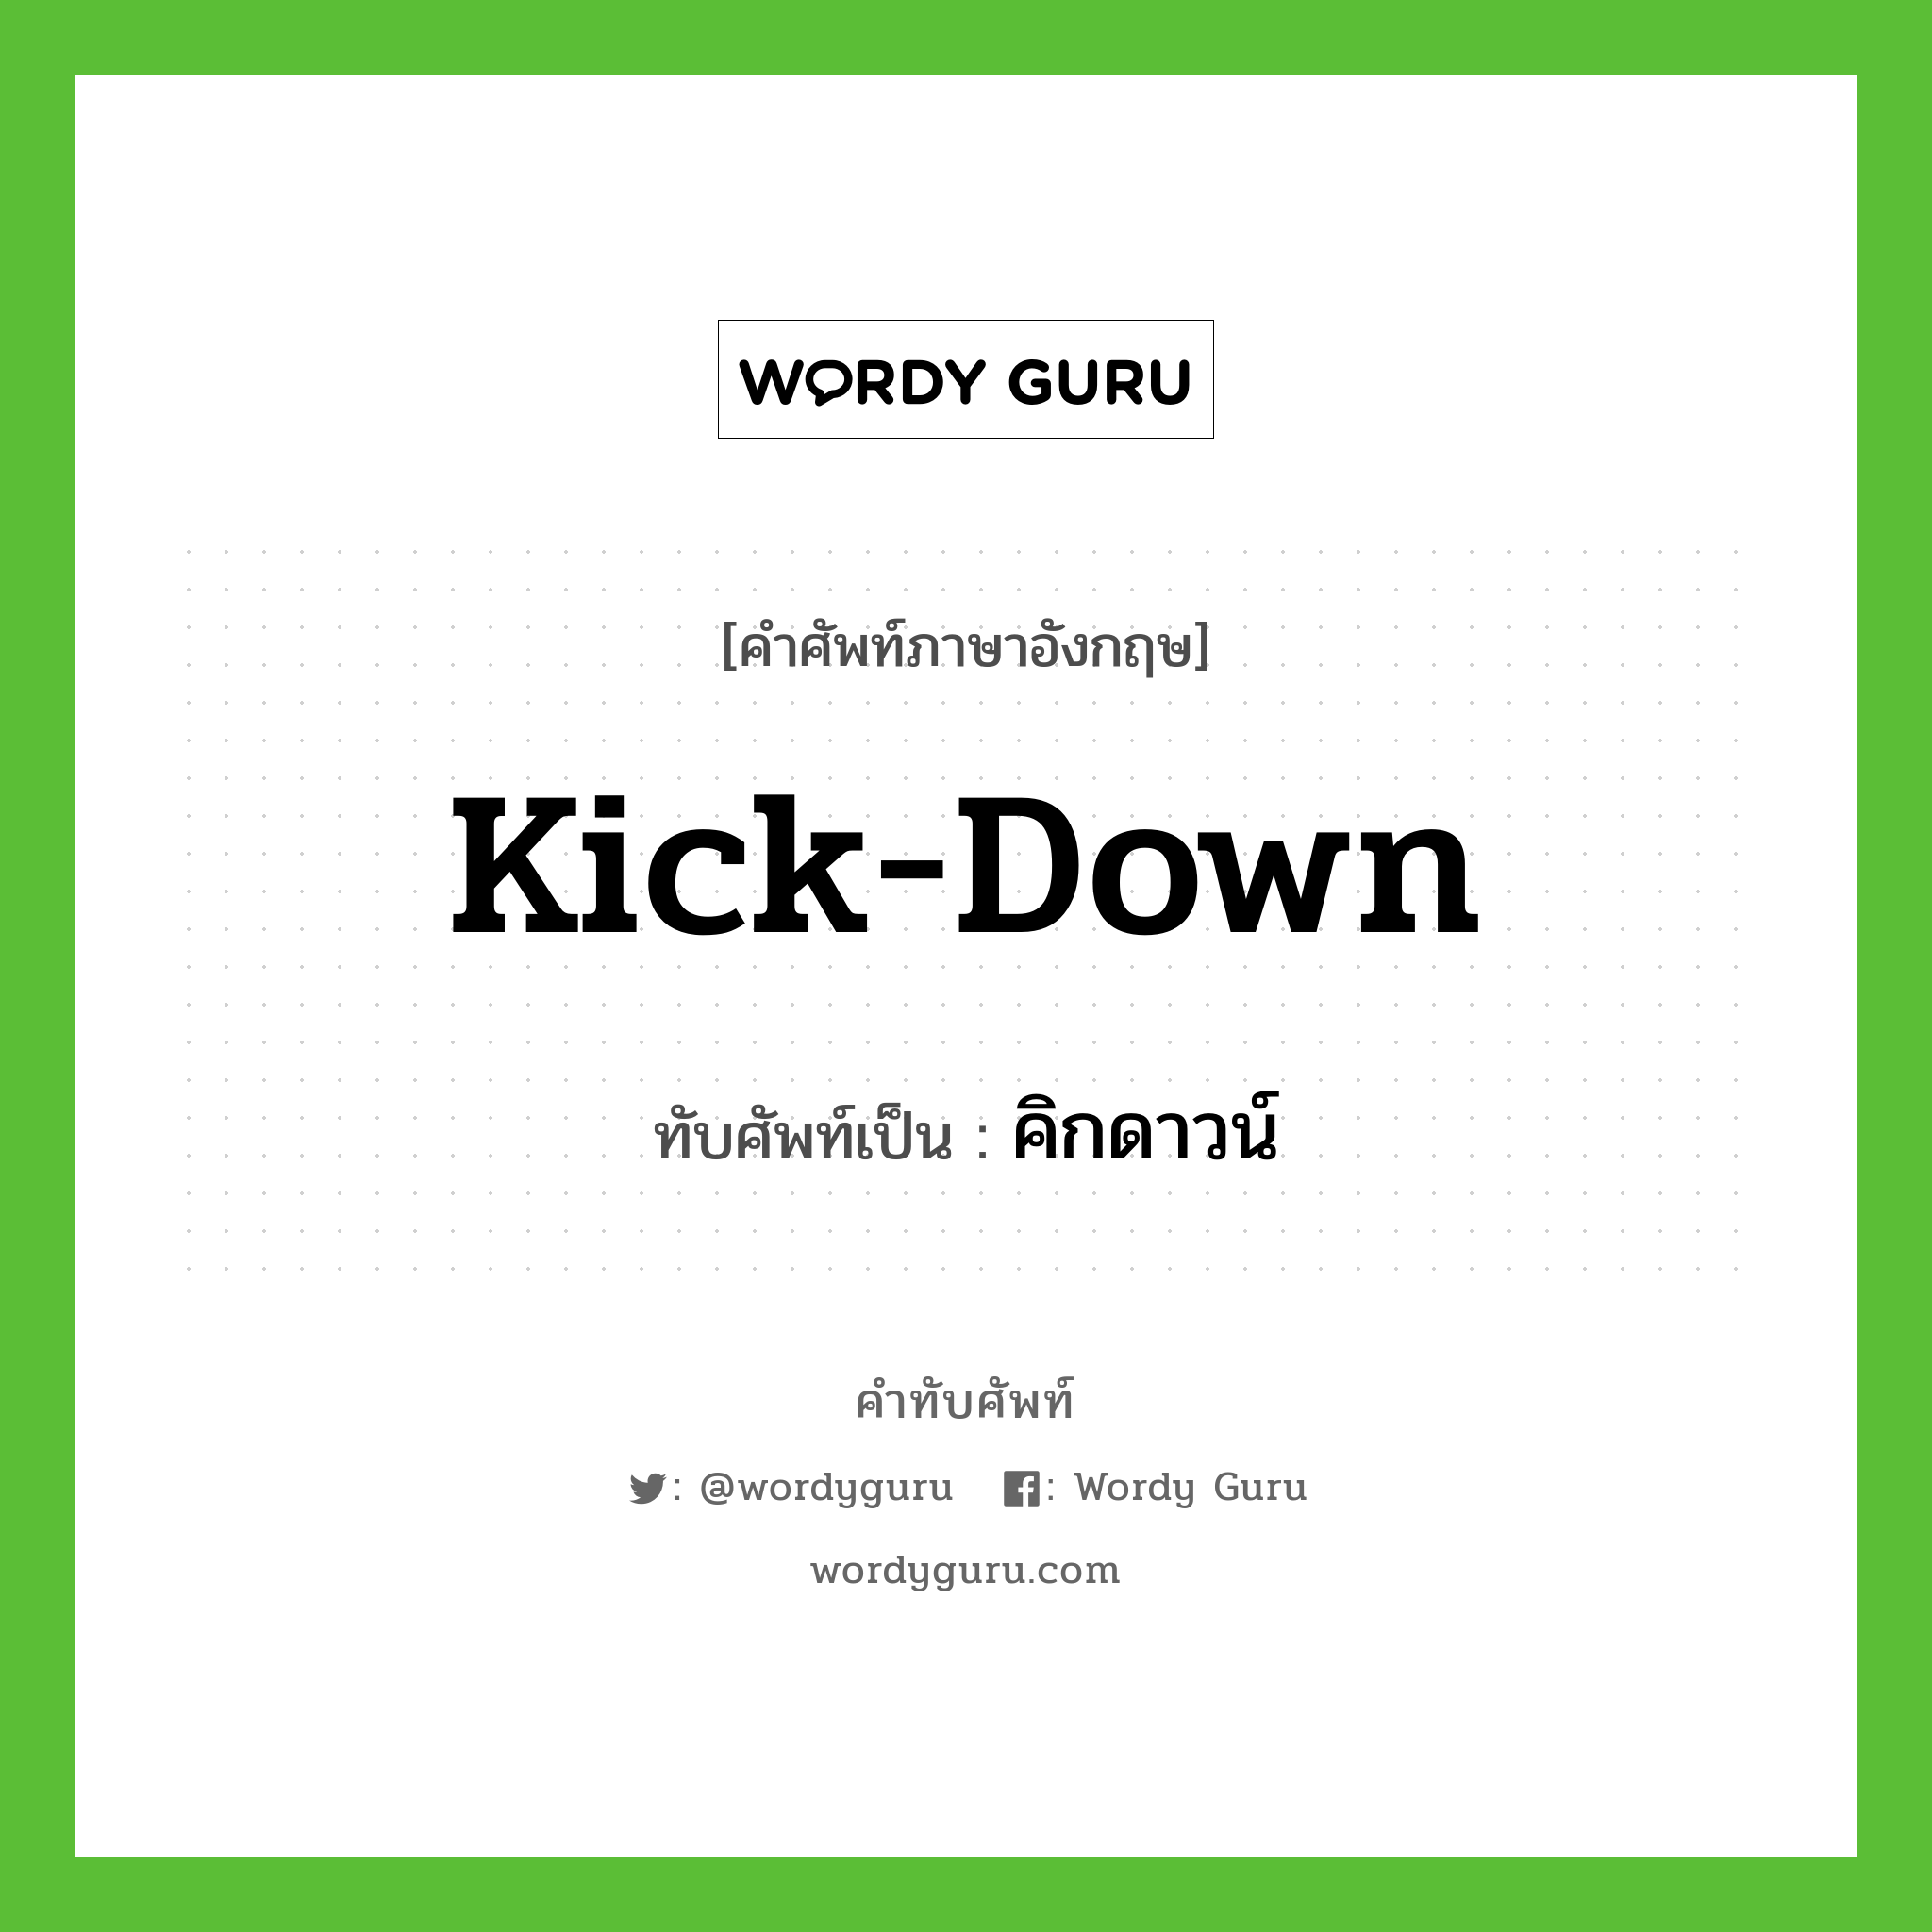 kick-down เขียนเป็นคำไทยว่าอะไร?, คำศัพท์ภาษาอังกฤษ kick-down ทับศัพท์เป็น คิกดาวน์